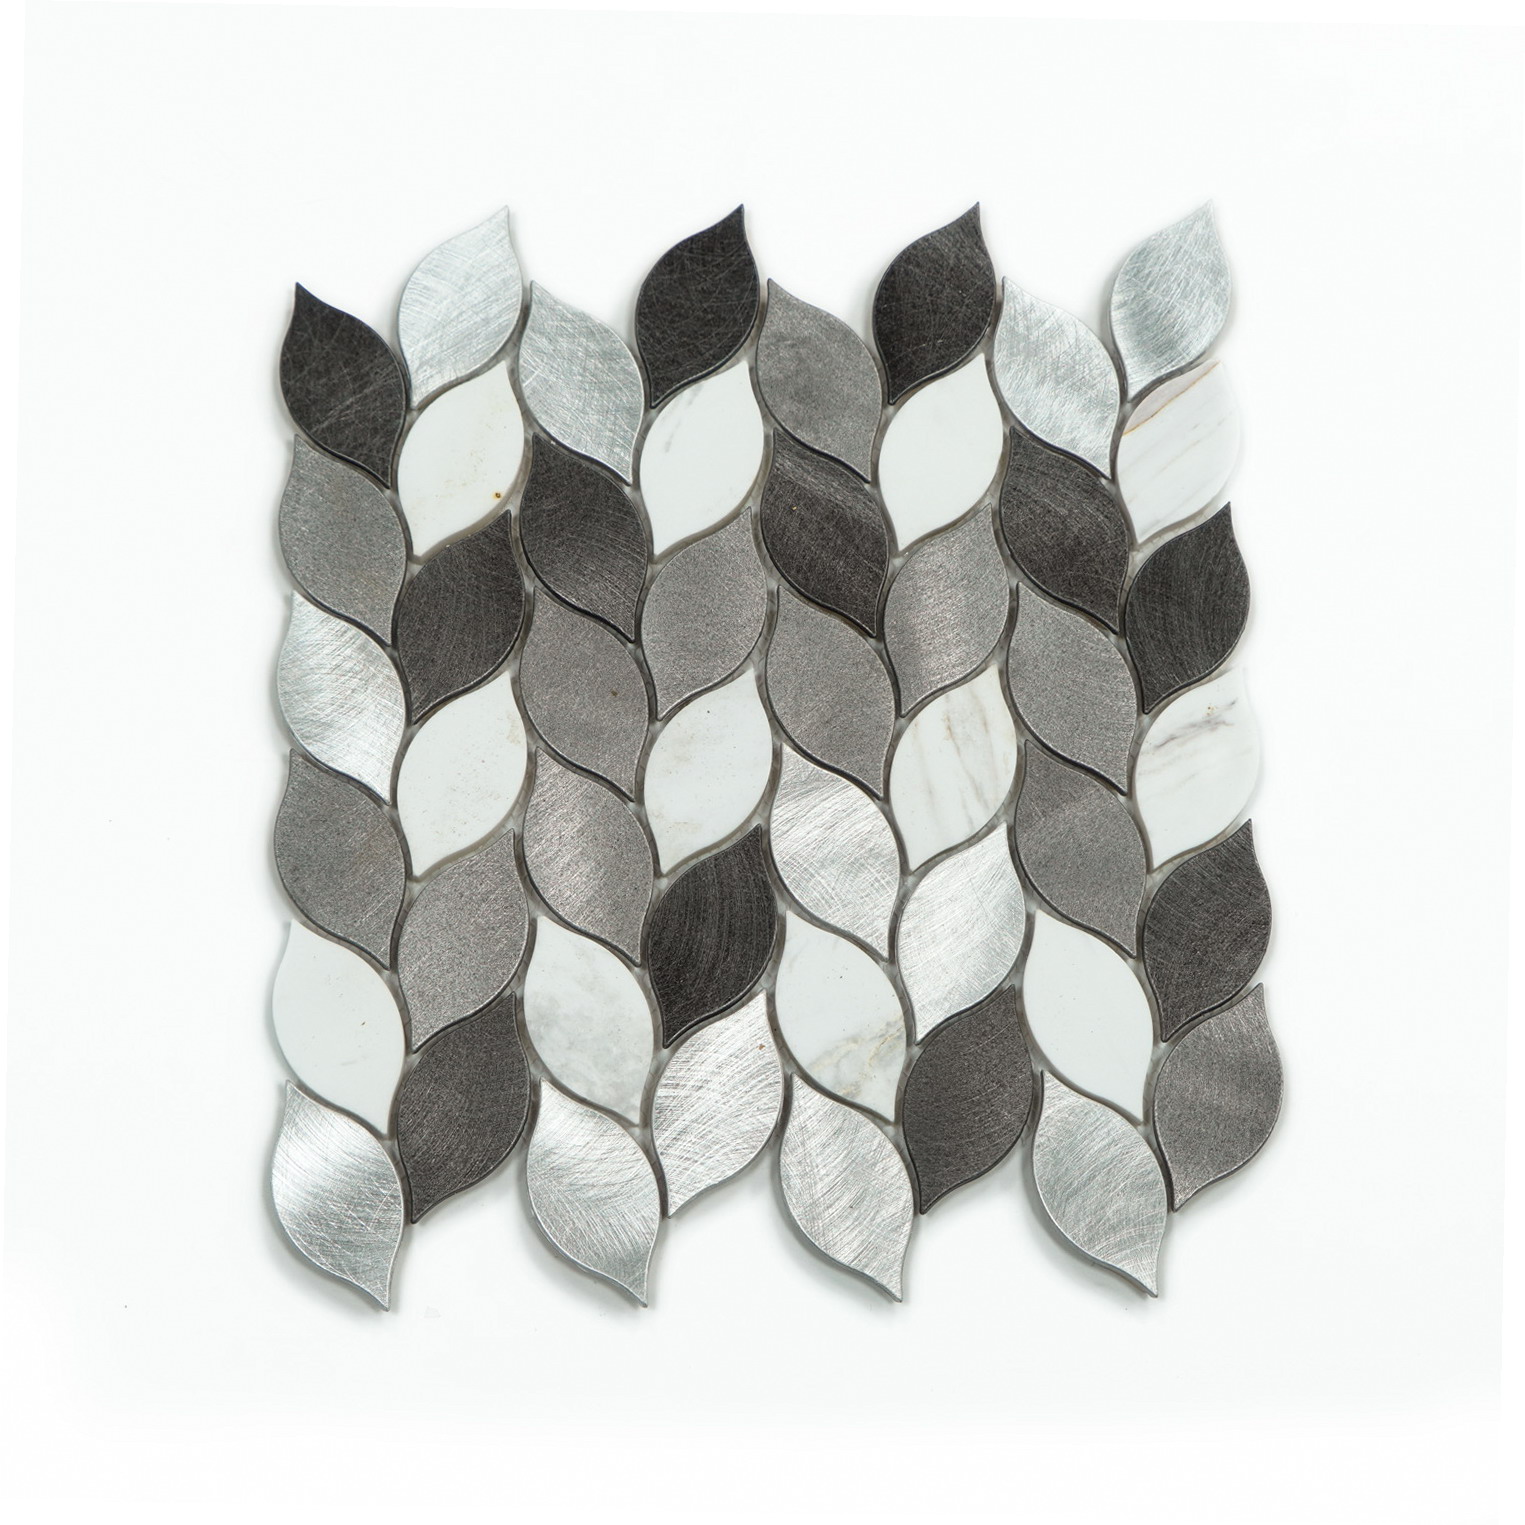 Reasonable price for Mosaic Floor Tiles - Popular  Design  Metal Aluminum mix white stone  Mosaic Tiles Stainless Steel Kitchen Backsplash Tiles – Rockpearl